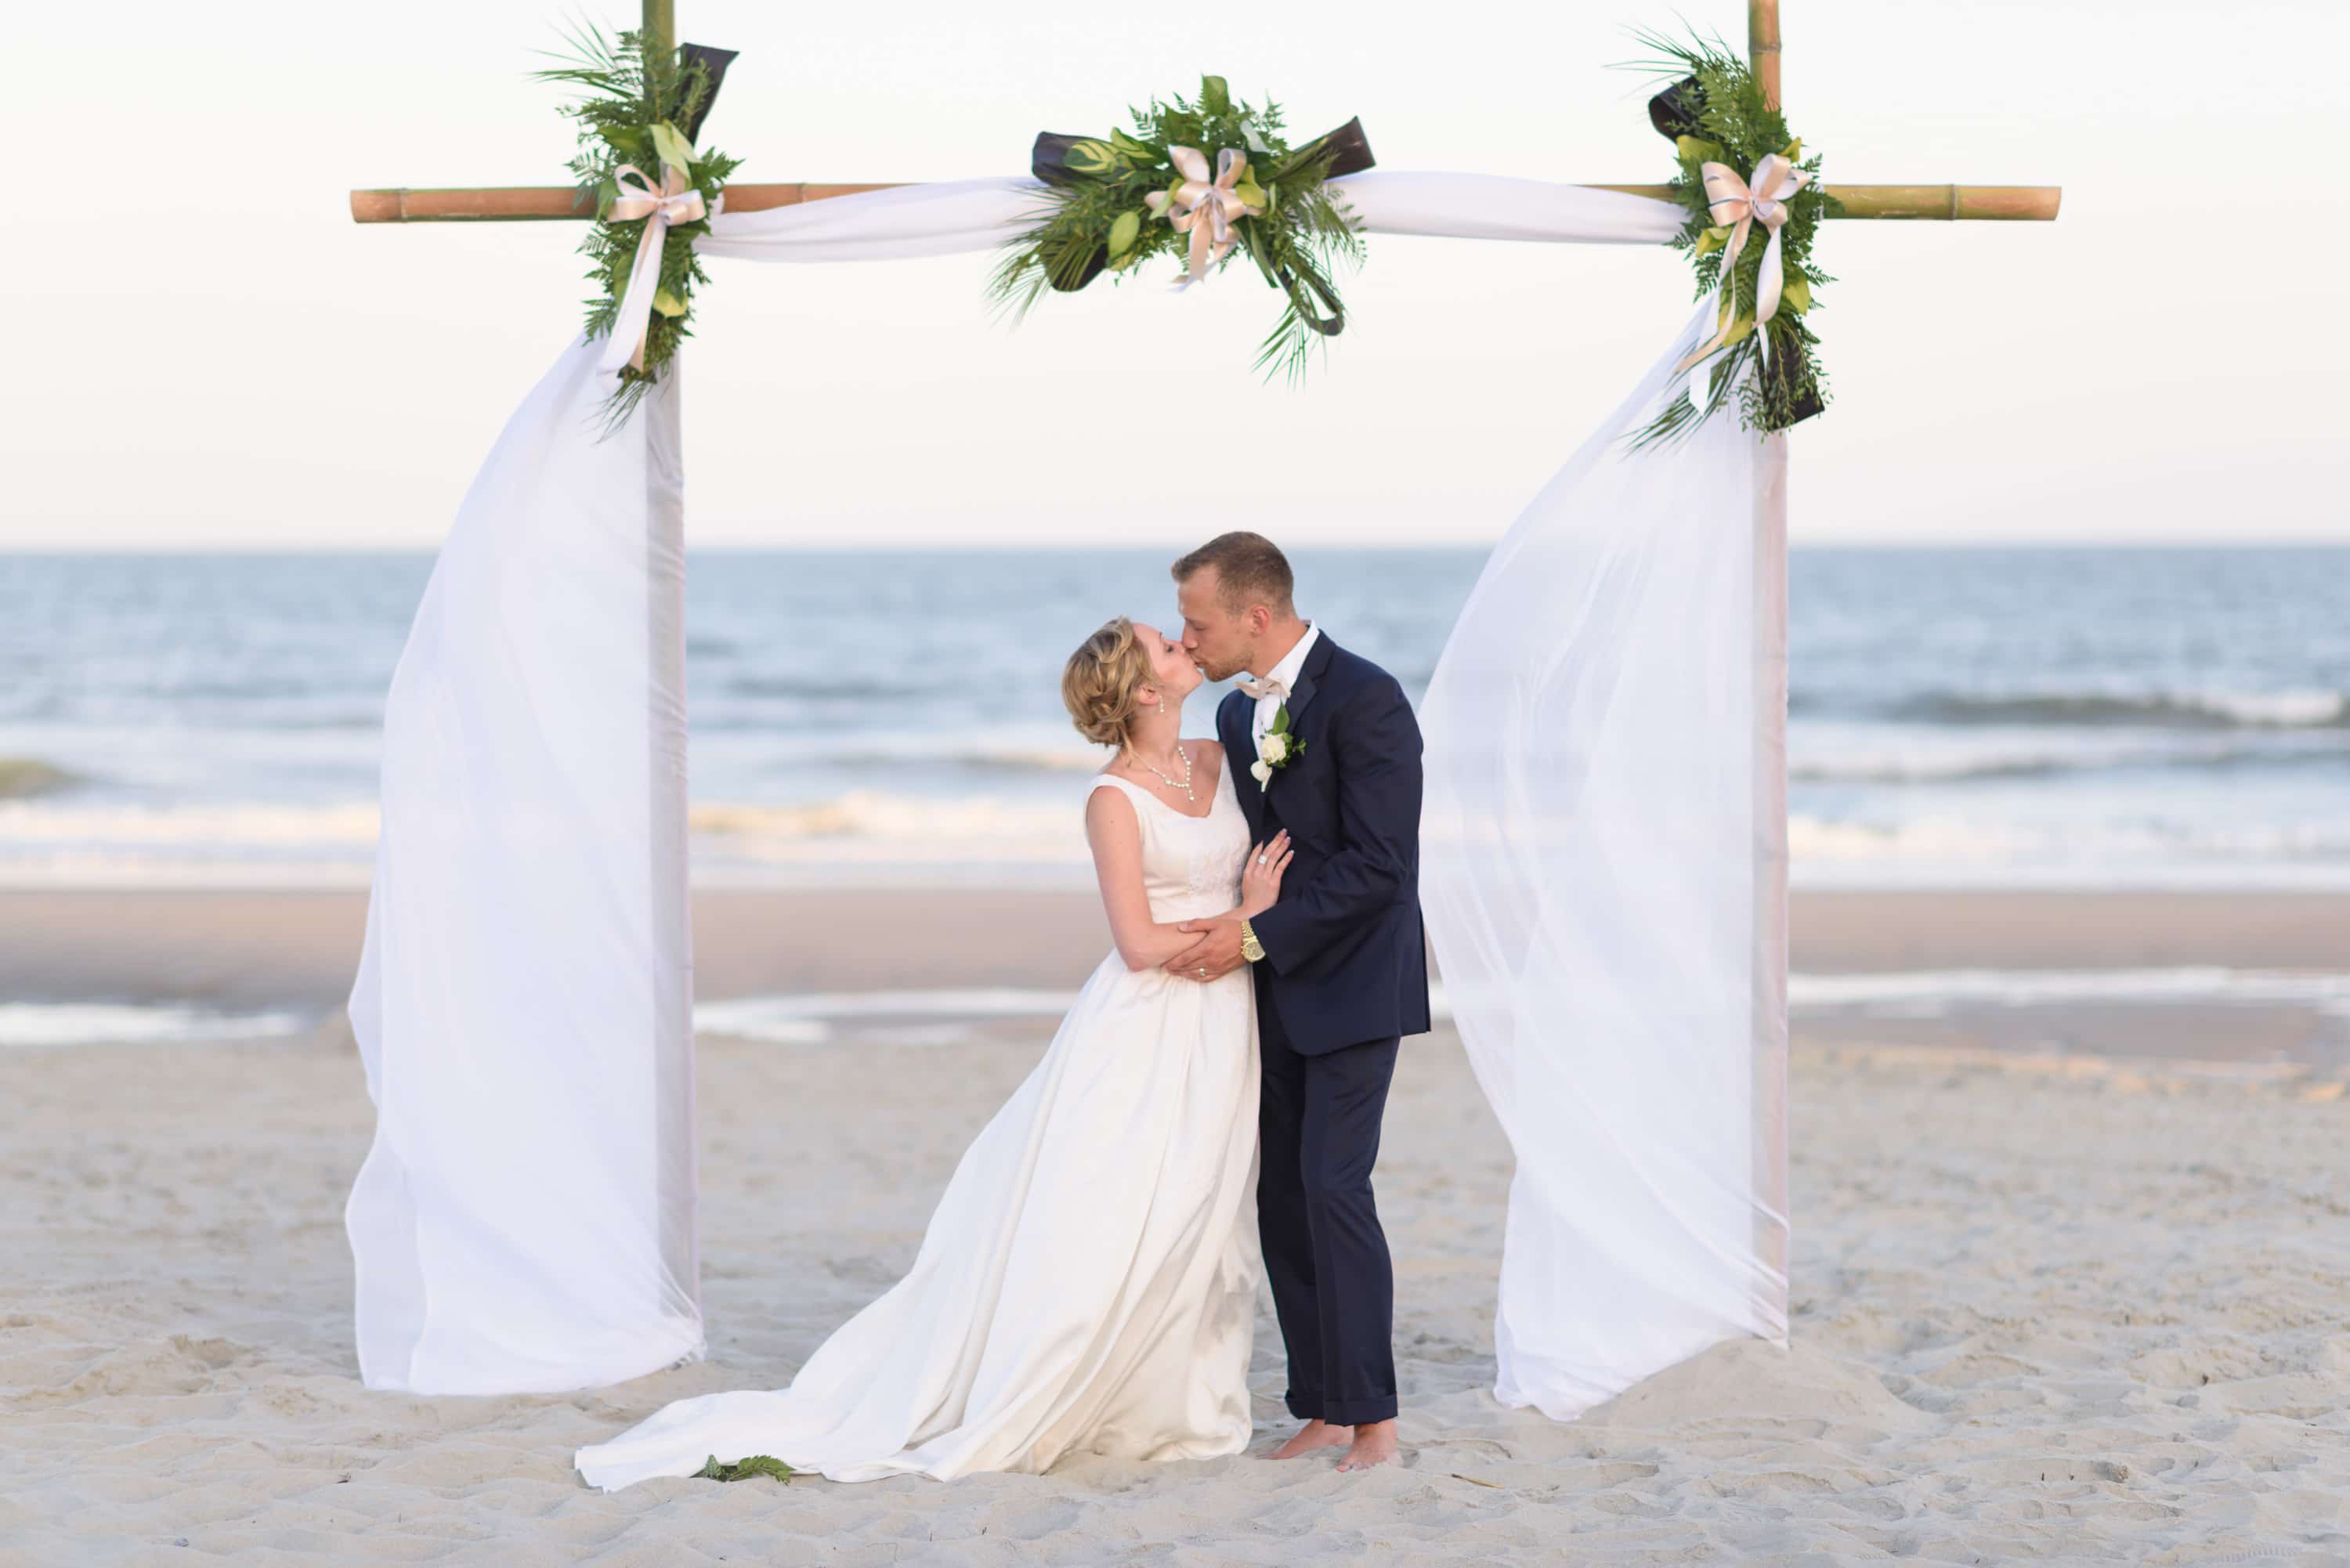 Kiss in front of the beach wedding arbor -  Grande Dunes Ocean Club